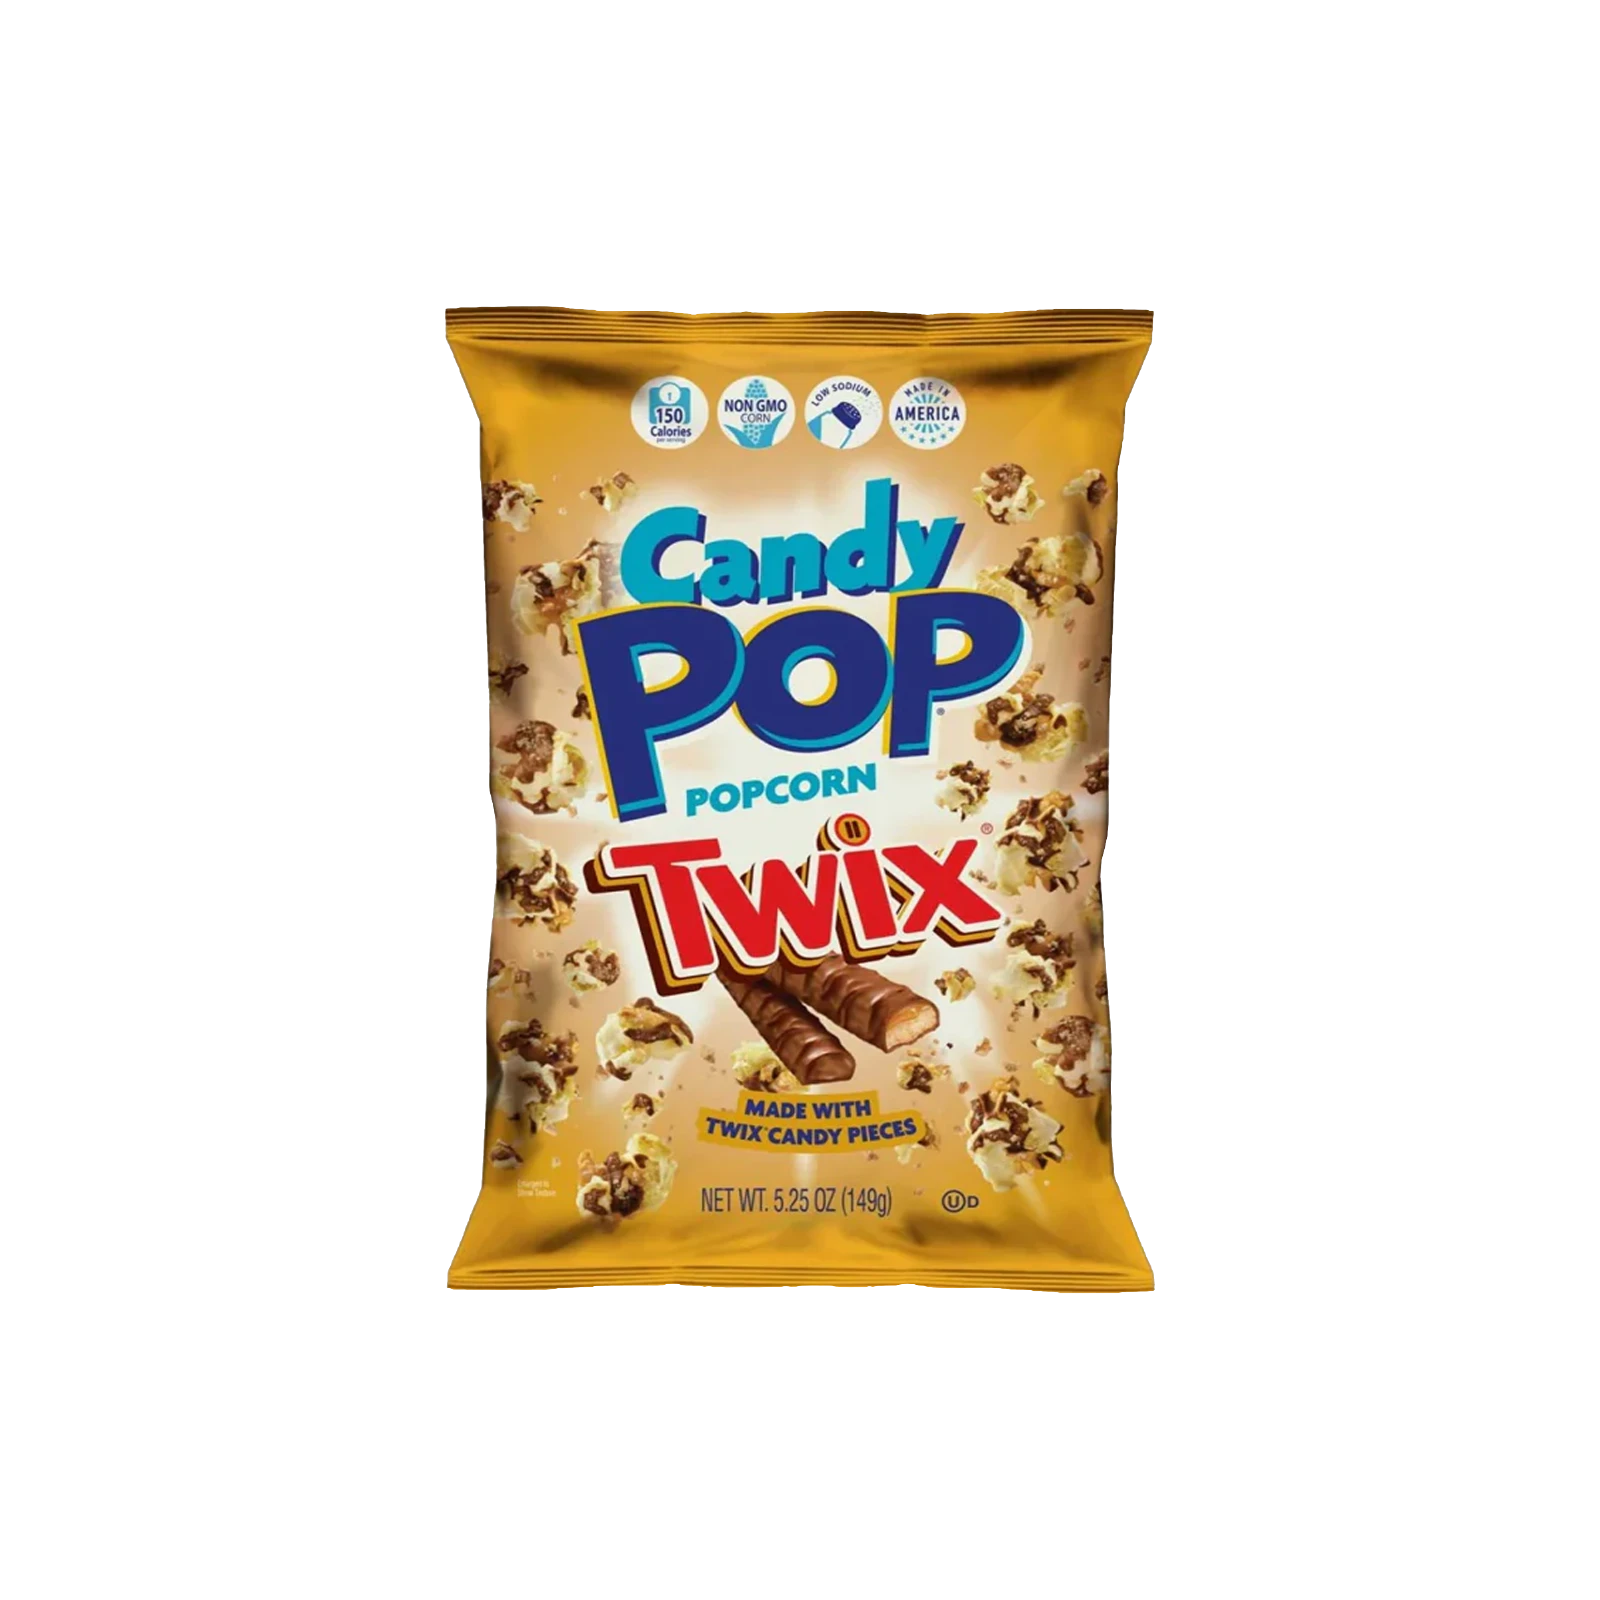 Candy Pop - Popcorn - Twix - 149g